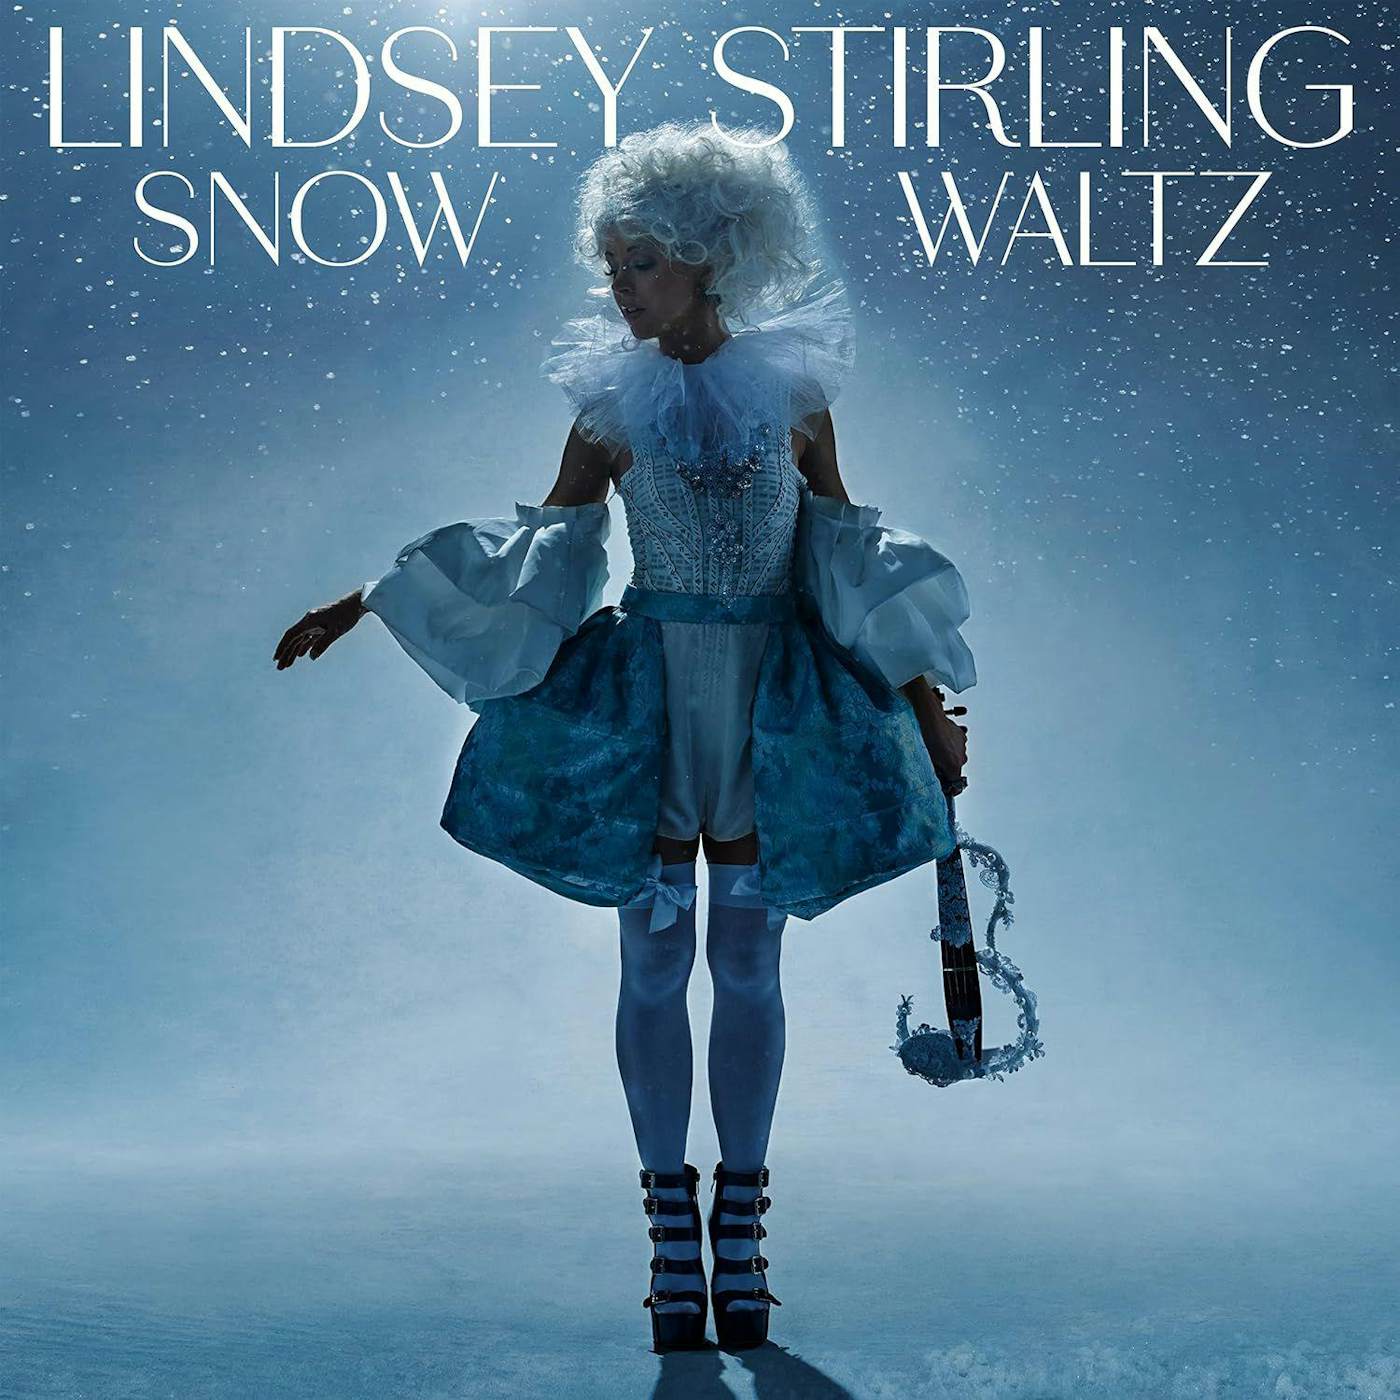 Lindsey Stirling Snow Waltz (Green/Black) Vinyl Record